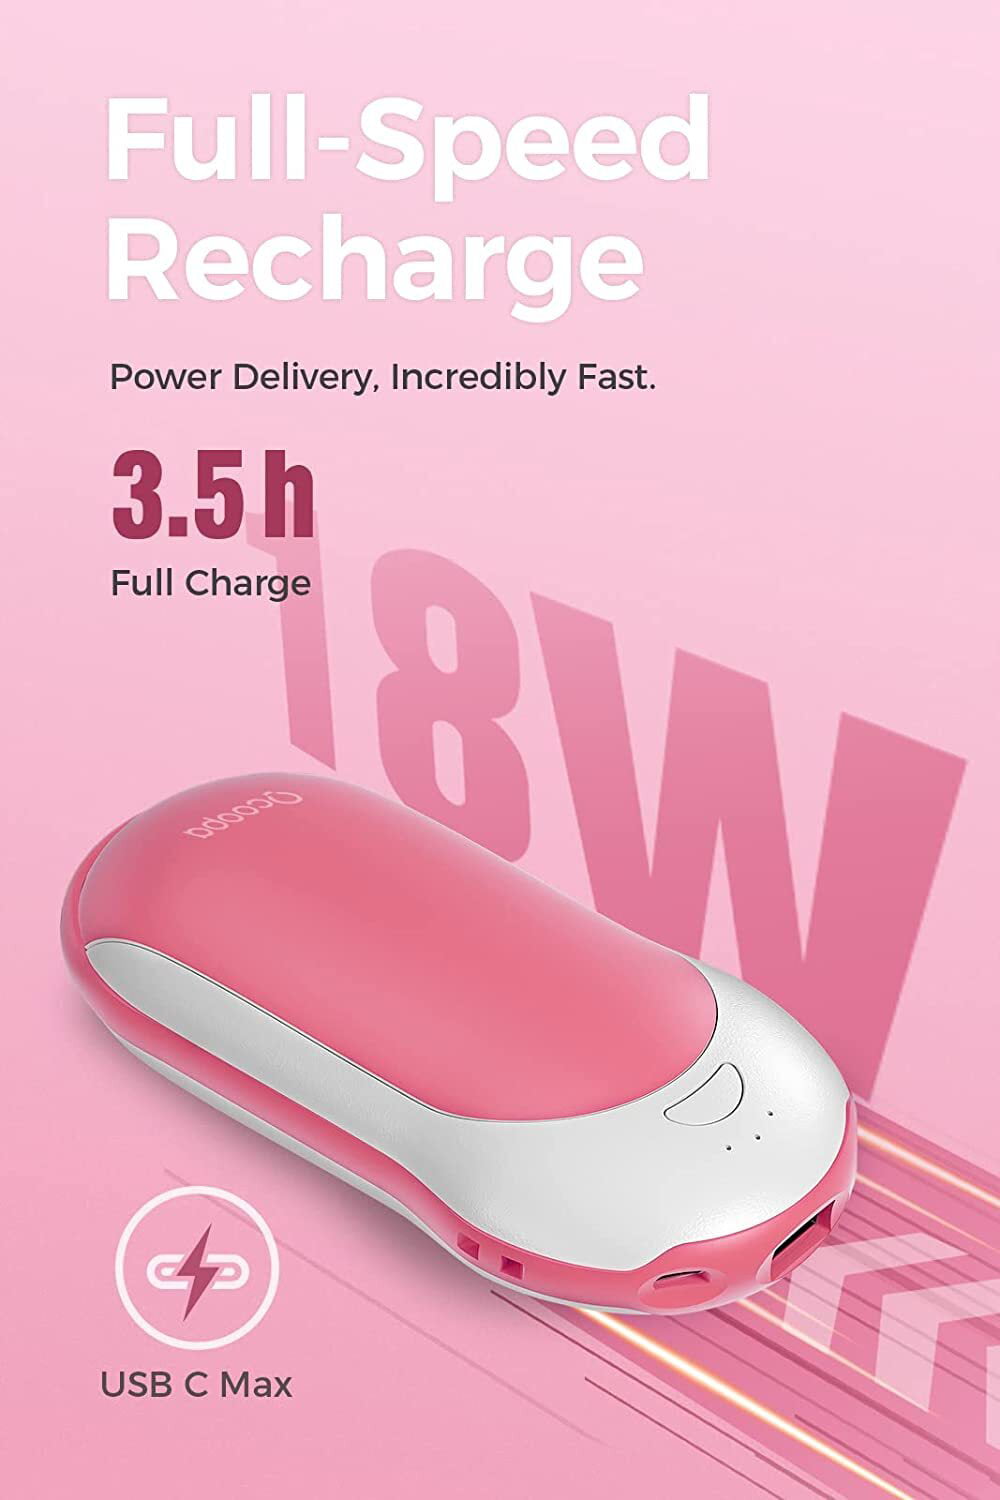 Ocoopa H01 Fashion - Chauffe-mains rechargeable 10 000 mAh, options de